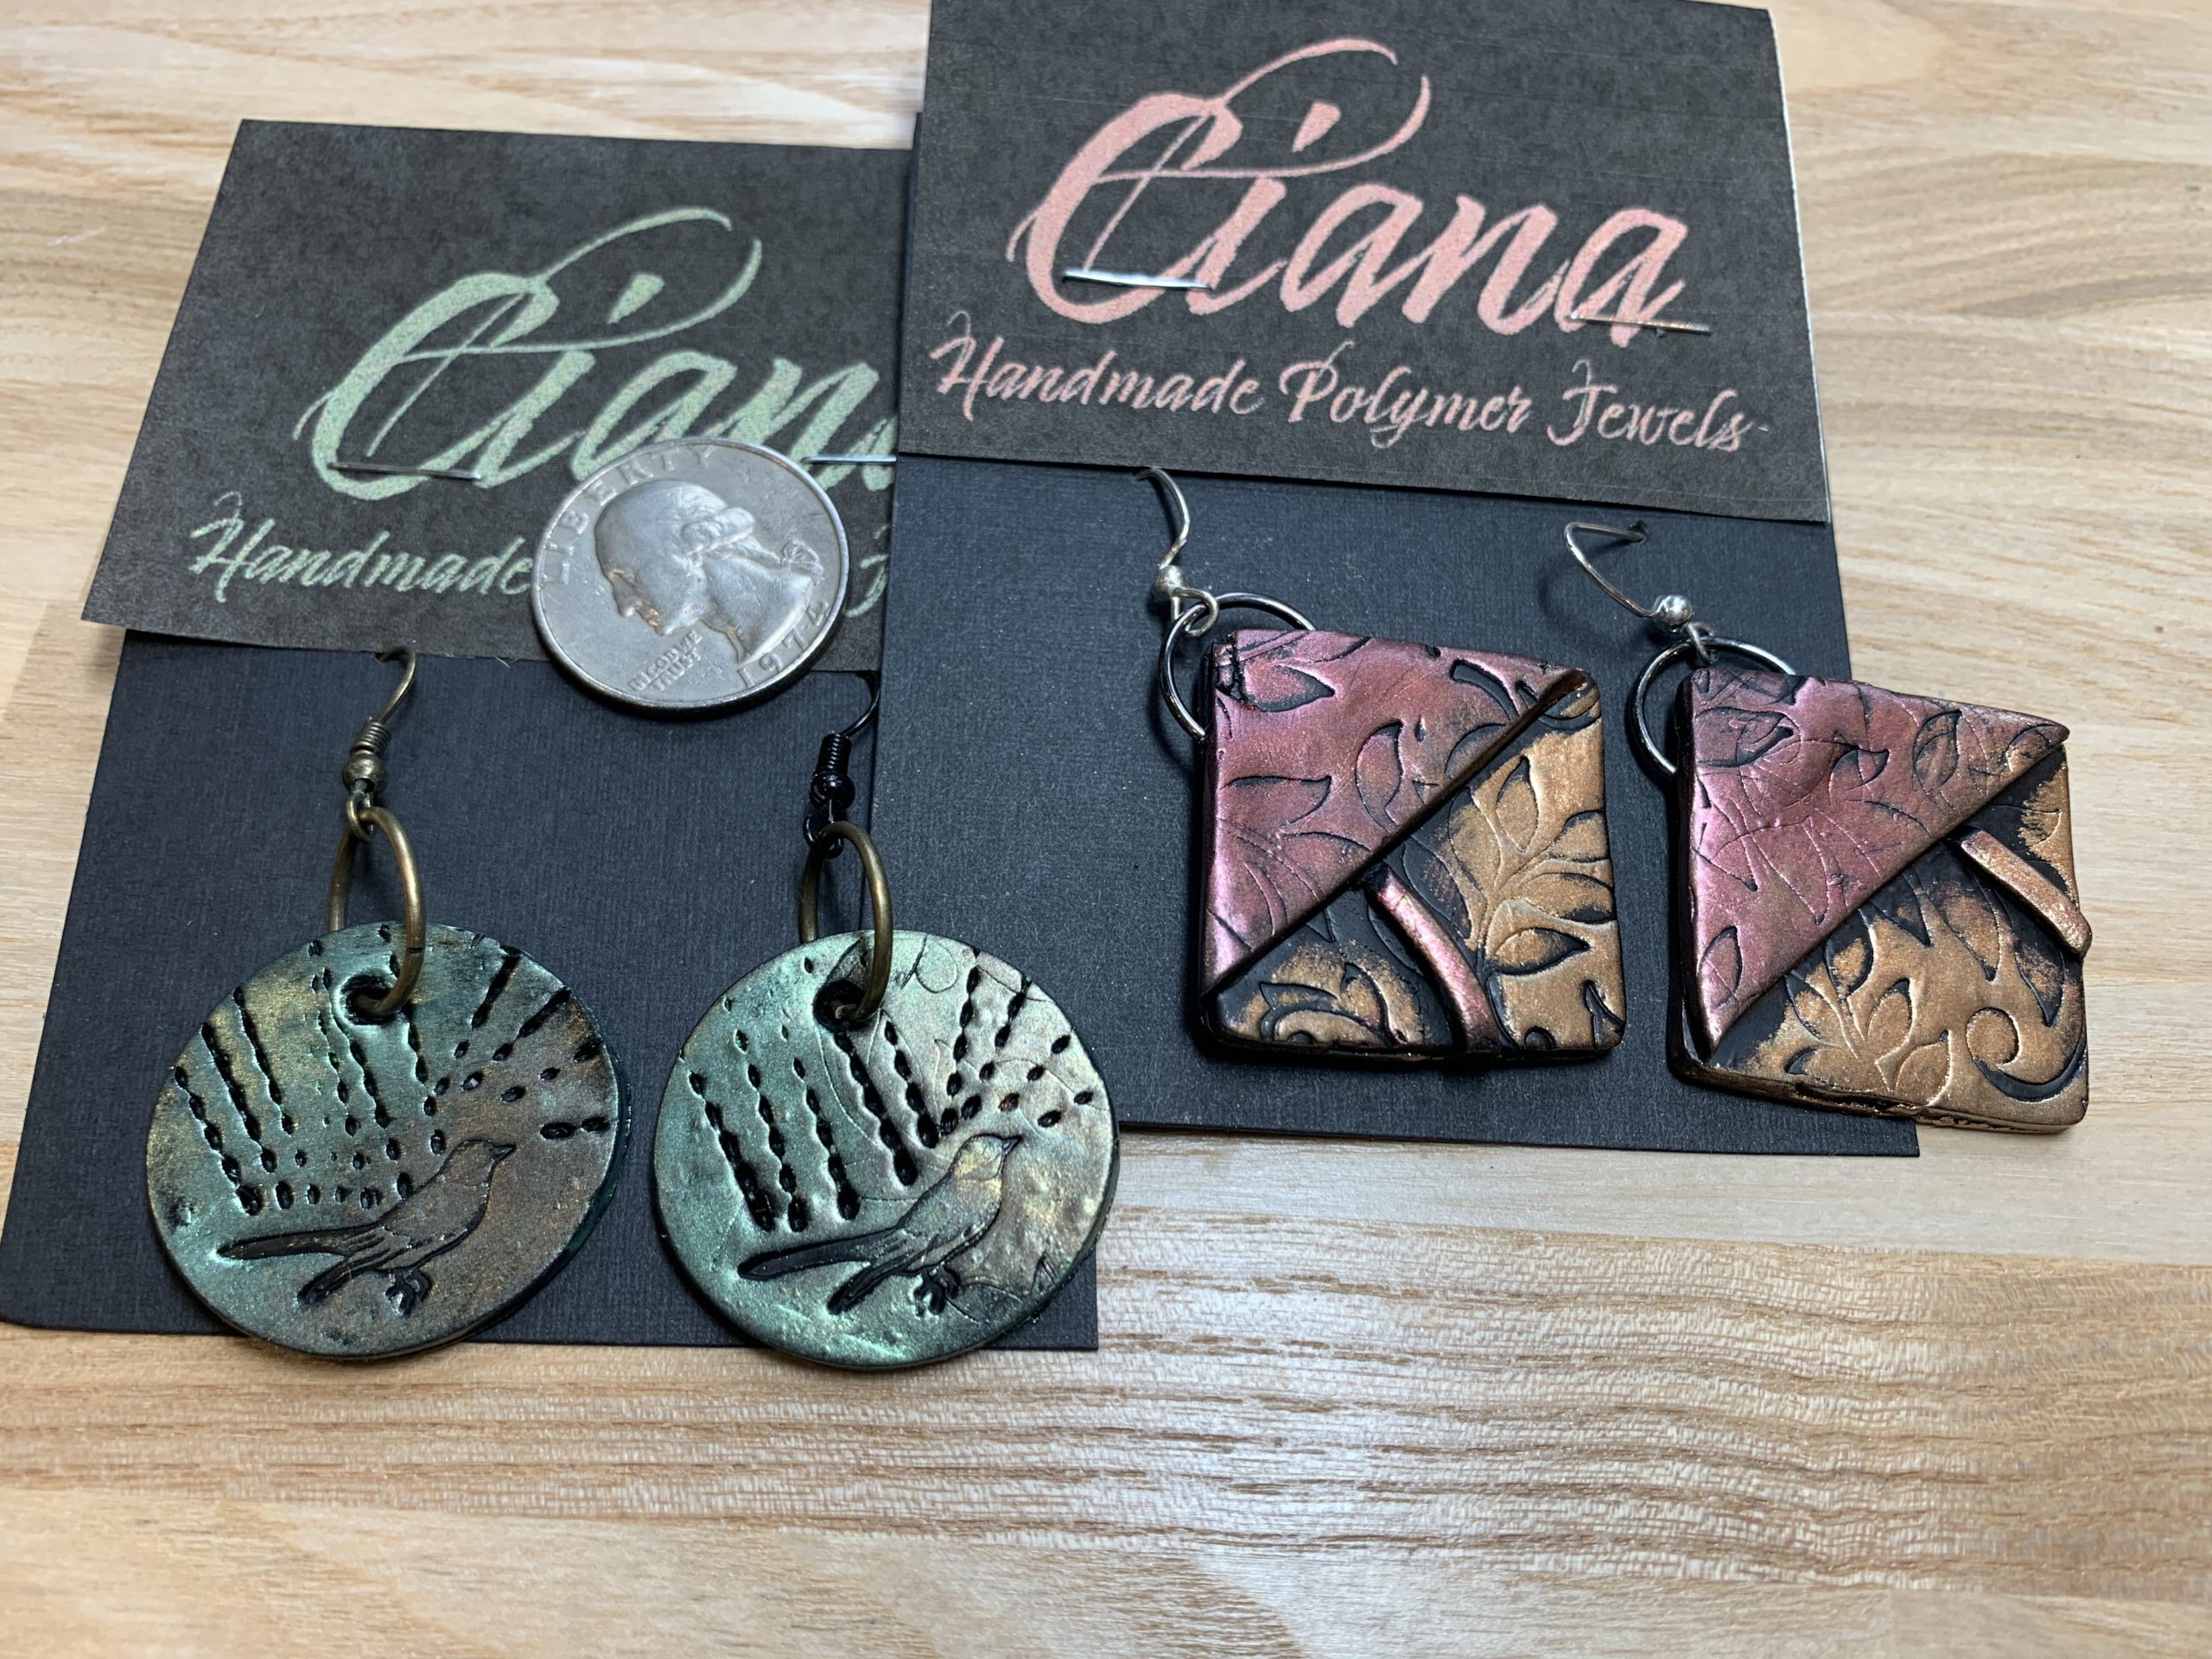 Ciana Jewels earrings